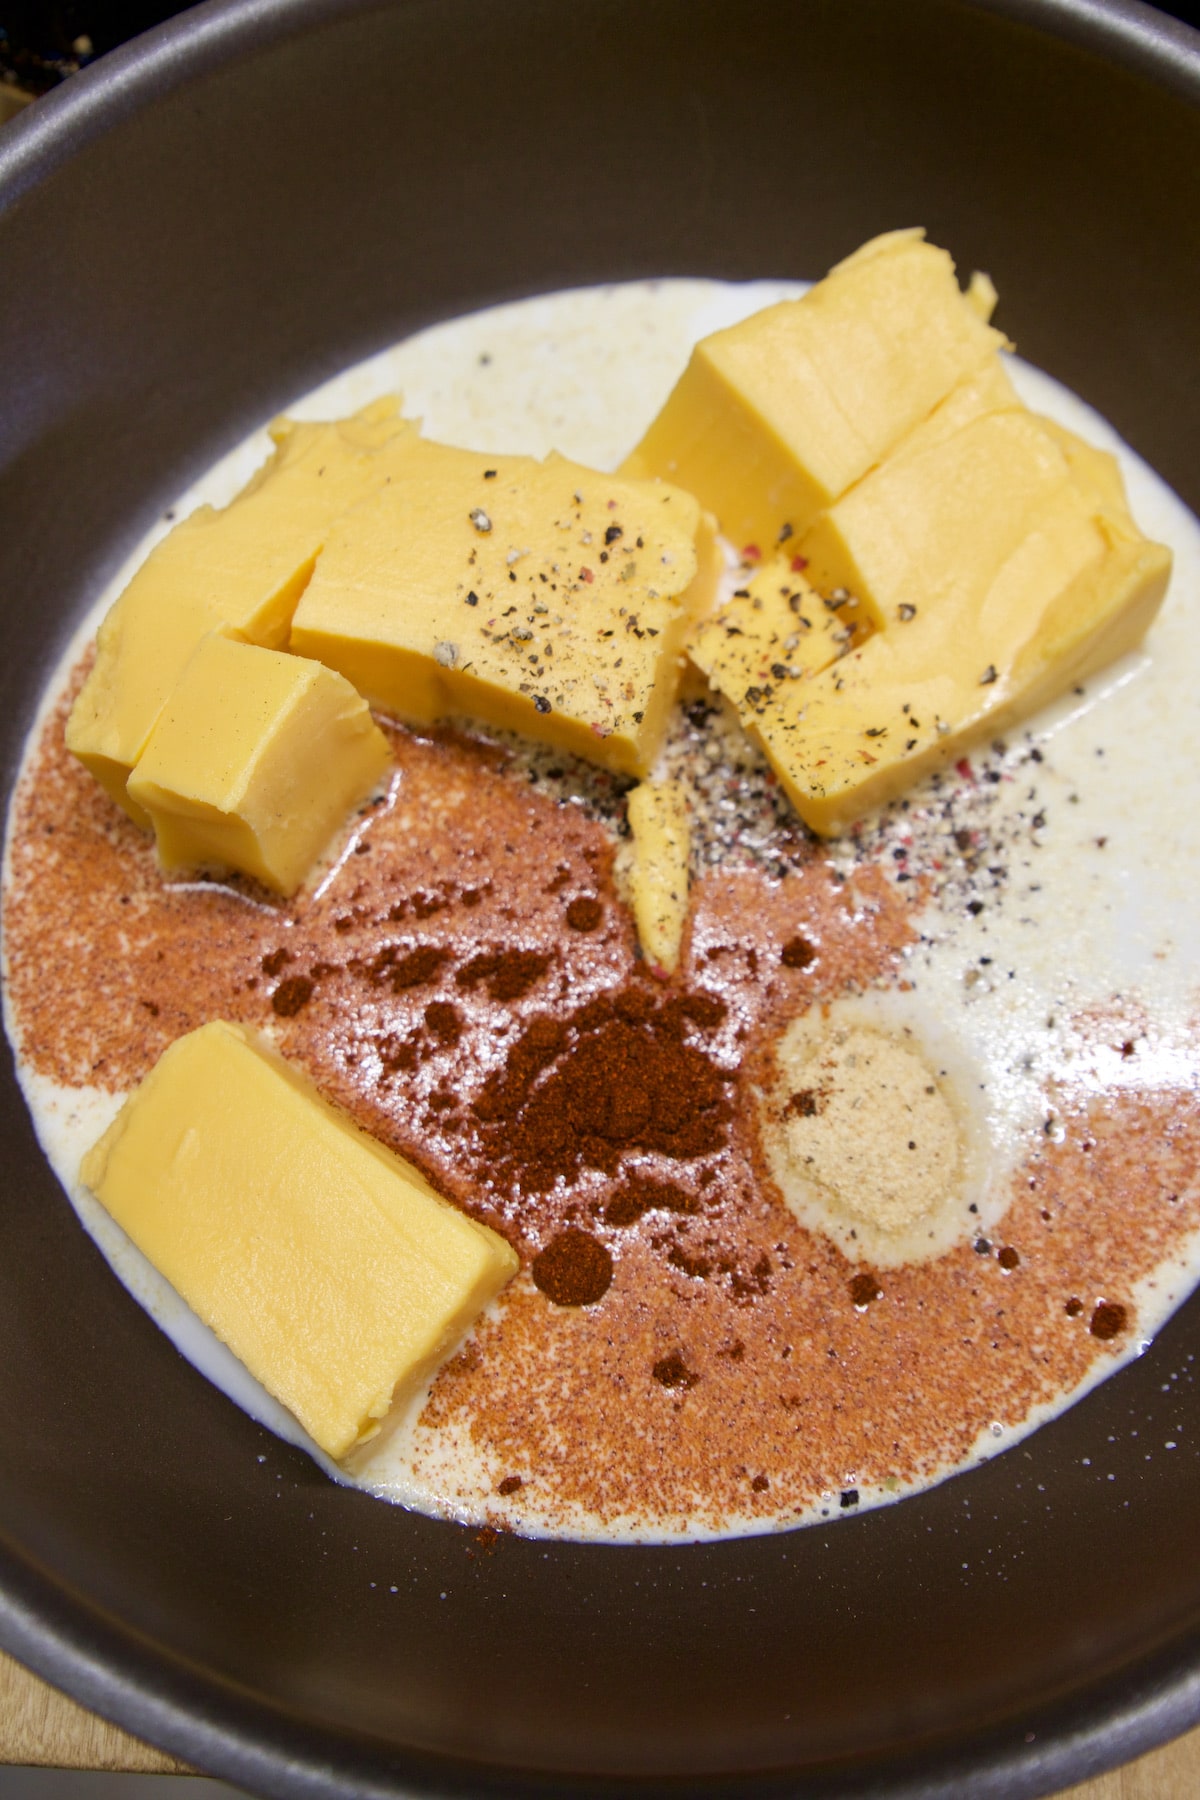 Making cheese sauce in a pan with velveeta.